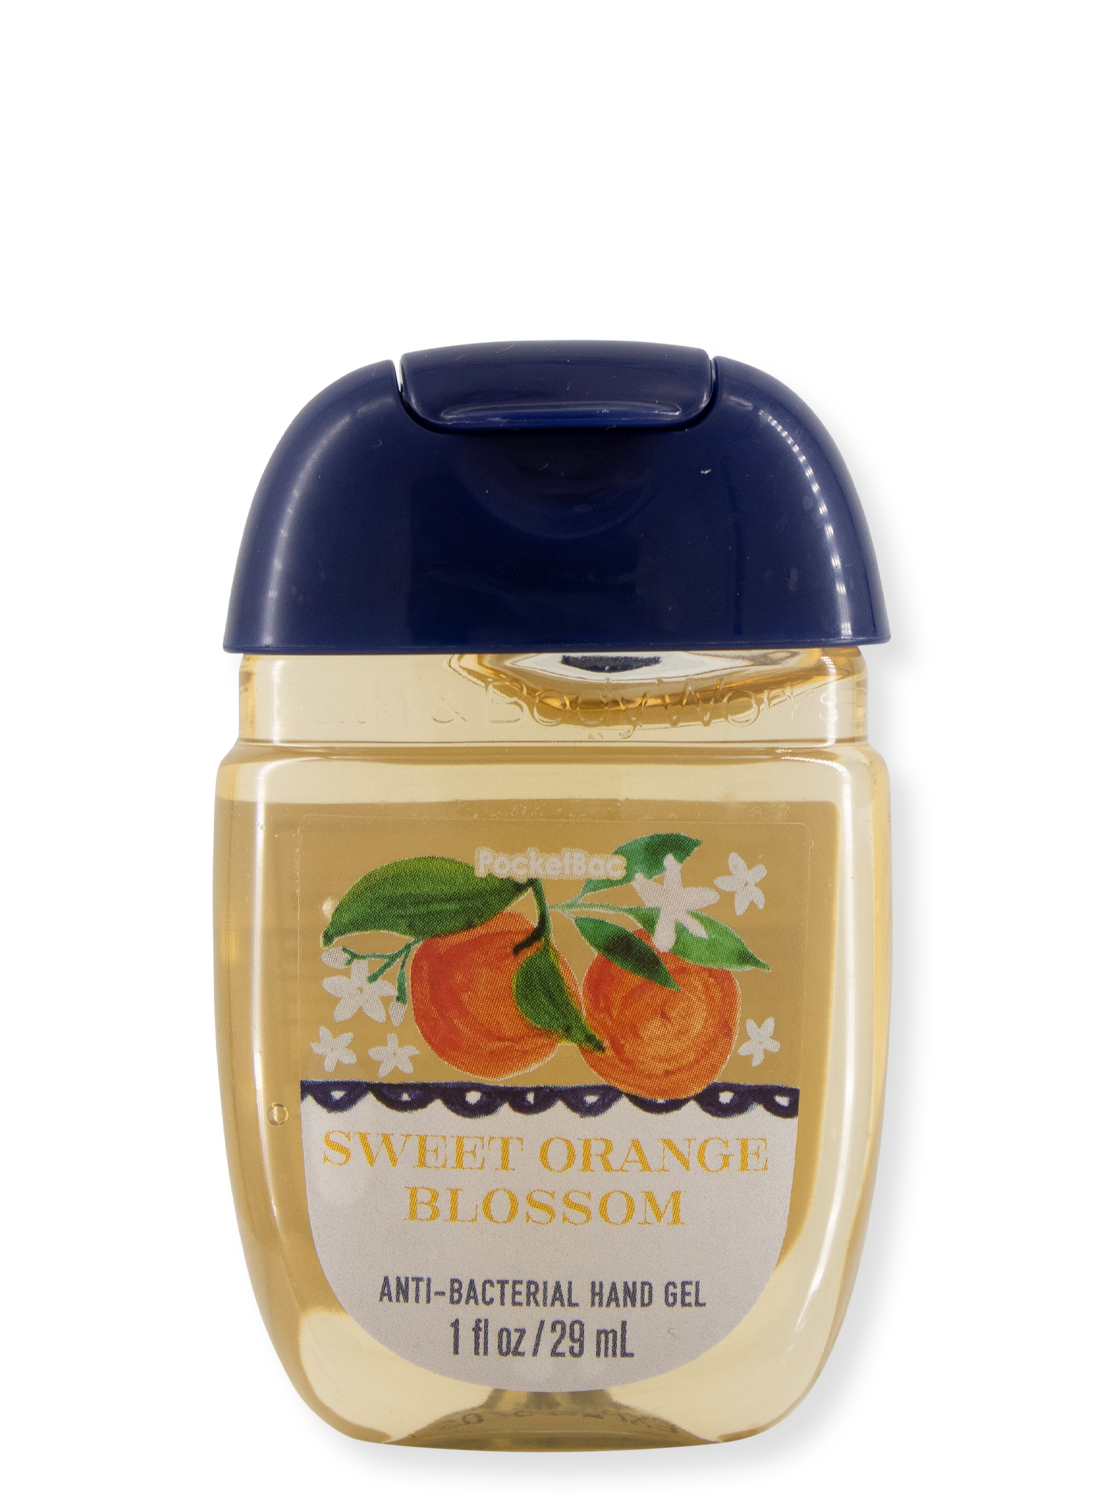 Hand disinfection gel - sweet orange blossom - 29ml